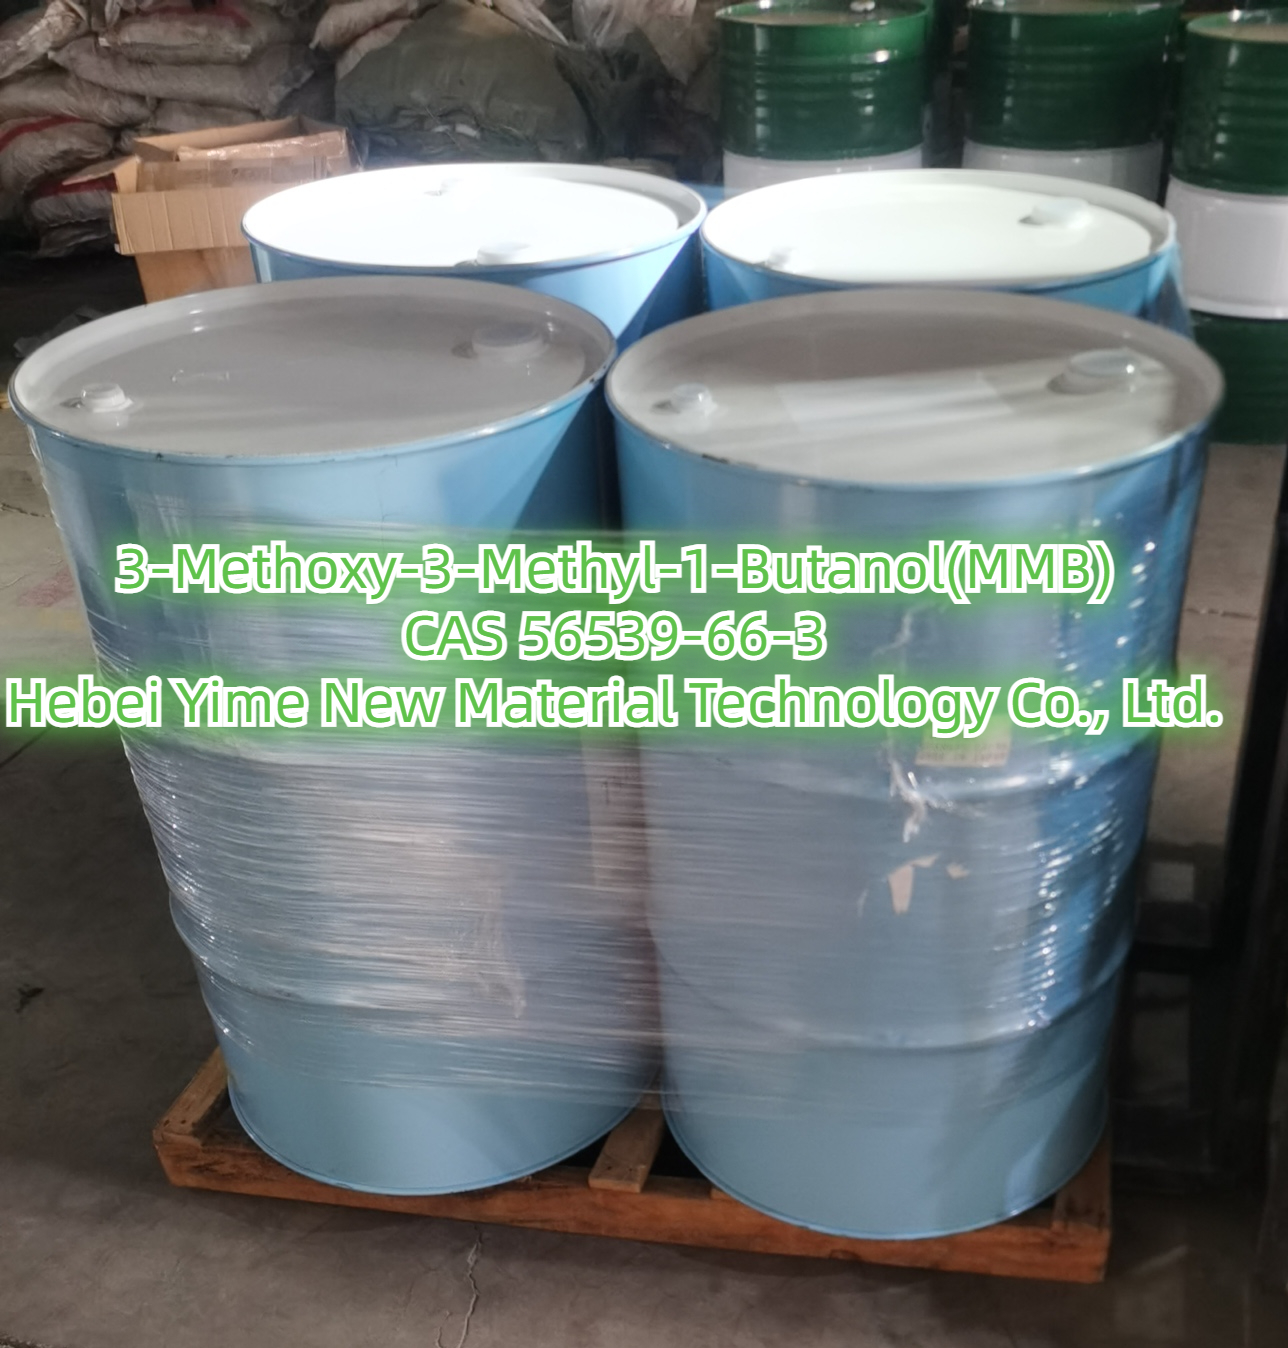 Gradd Cosmetig 3-Methyl-3-Methoxybutanol MMB CAS 56539-66-3 Mewn Stoc